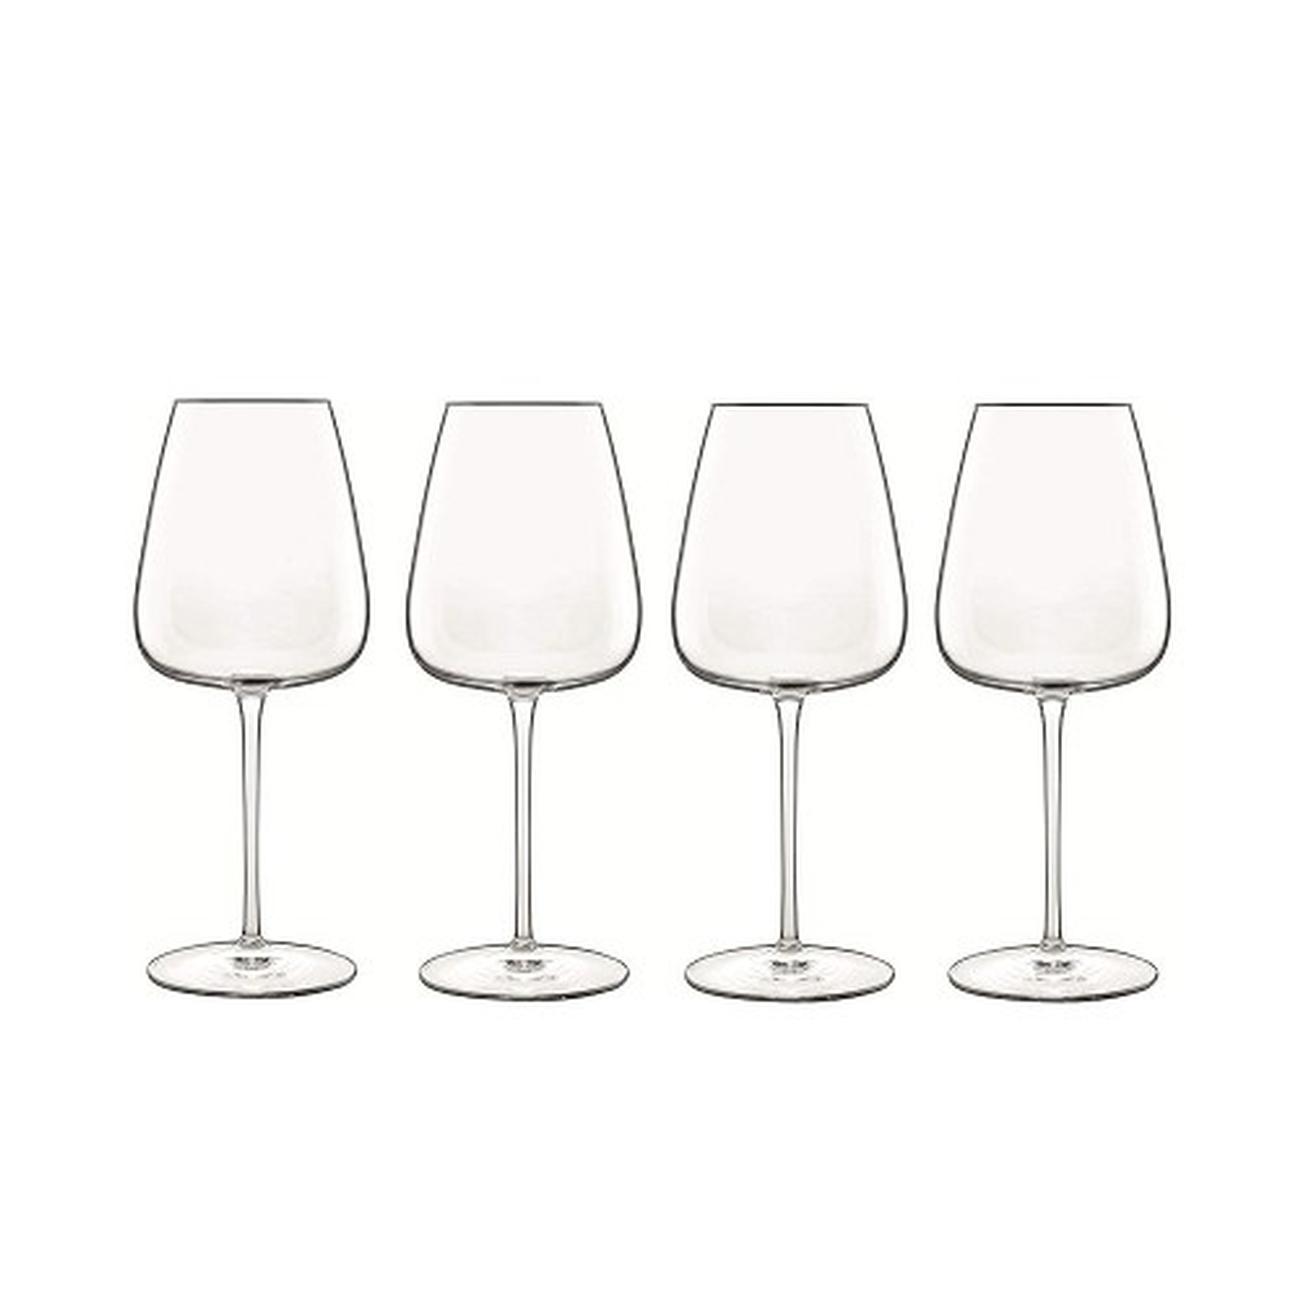 luigi-bormioli-talismano-set-of-4-chardonnay-white-wine-glass - Luigi Bormioli Talismano Chardonnay White Wine Glass Set of 4